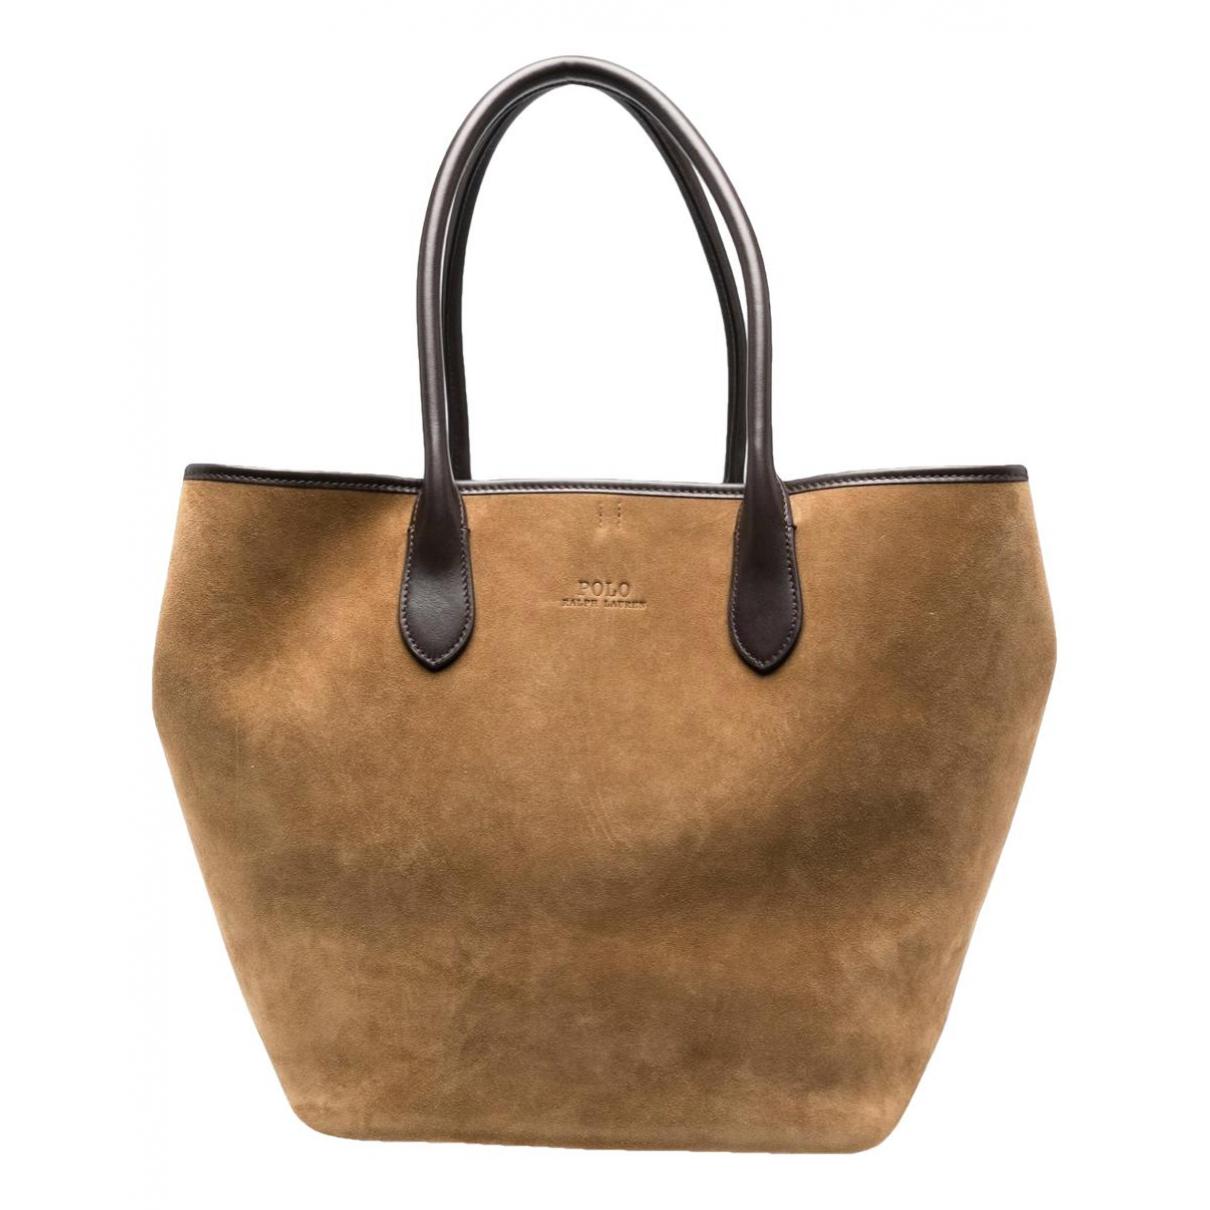 Polo Ralph Lauren Handbags for Women - Vestiaire Collective | Vestiaire Collective (Global)